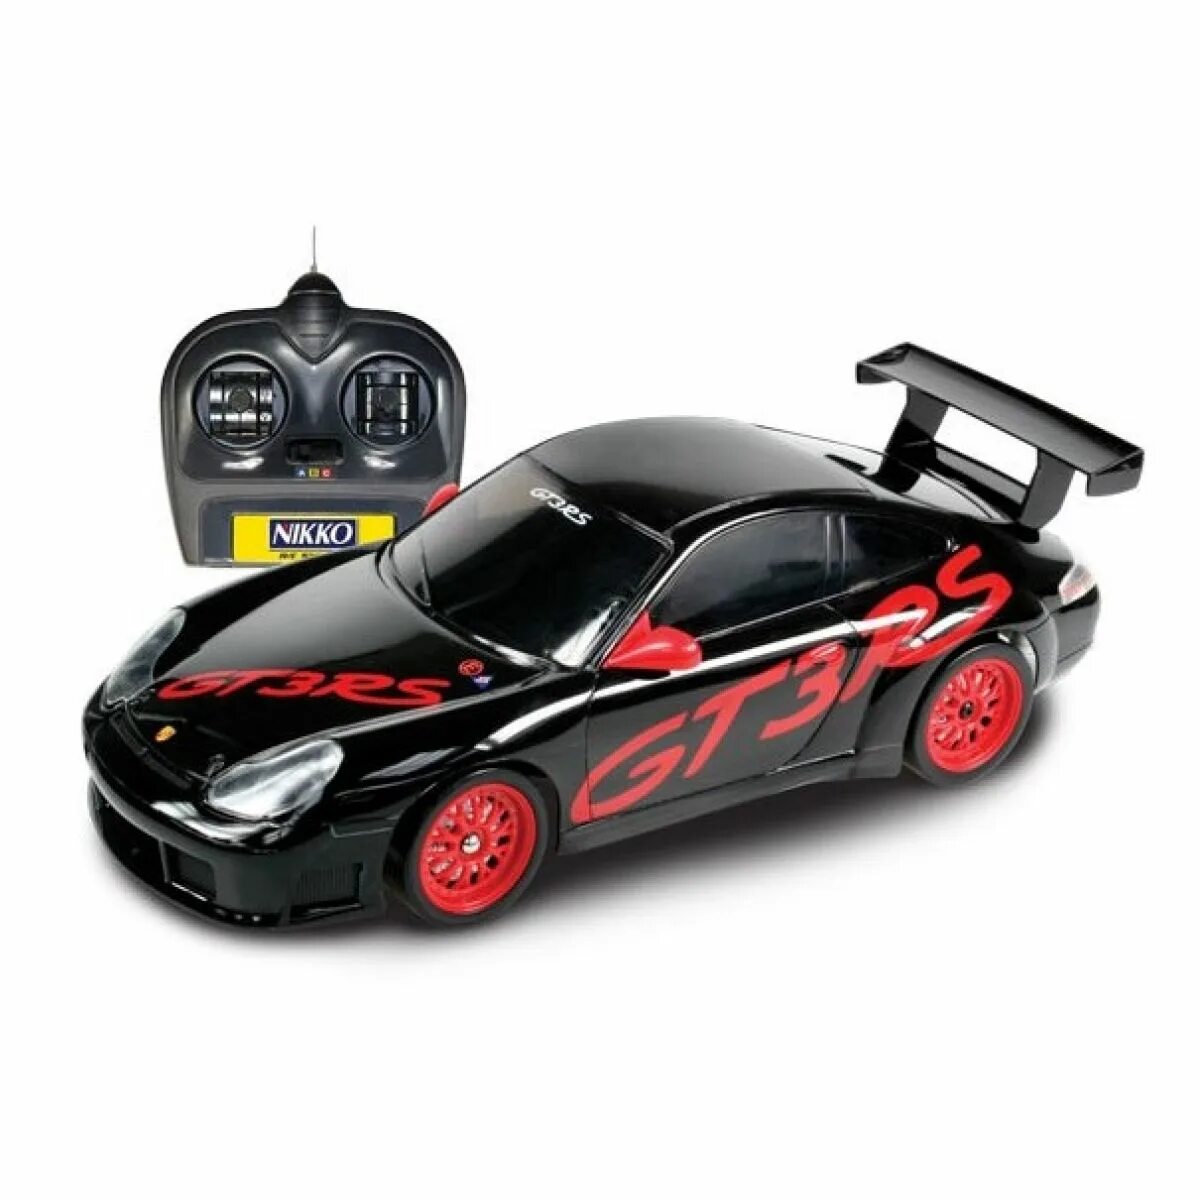 Nikko RC Porsche 911 gt3 RS. Р/У Nikko Porsche 911 gt3 RS. Nikko Porsche 911 gt3 r на радиоуправлении. Порше 911 на пульте управления. Крутые машины на пульте